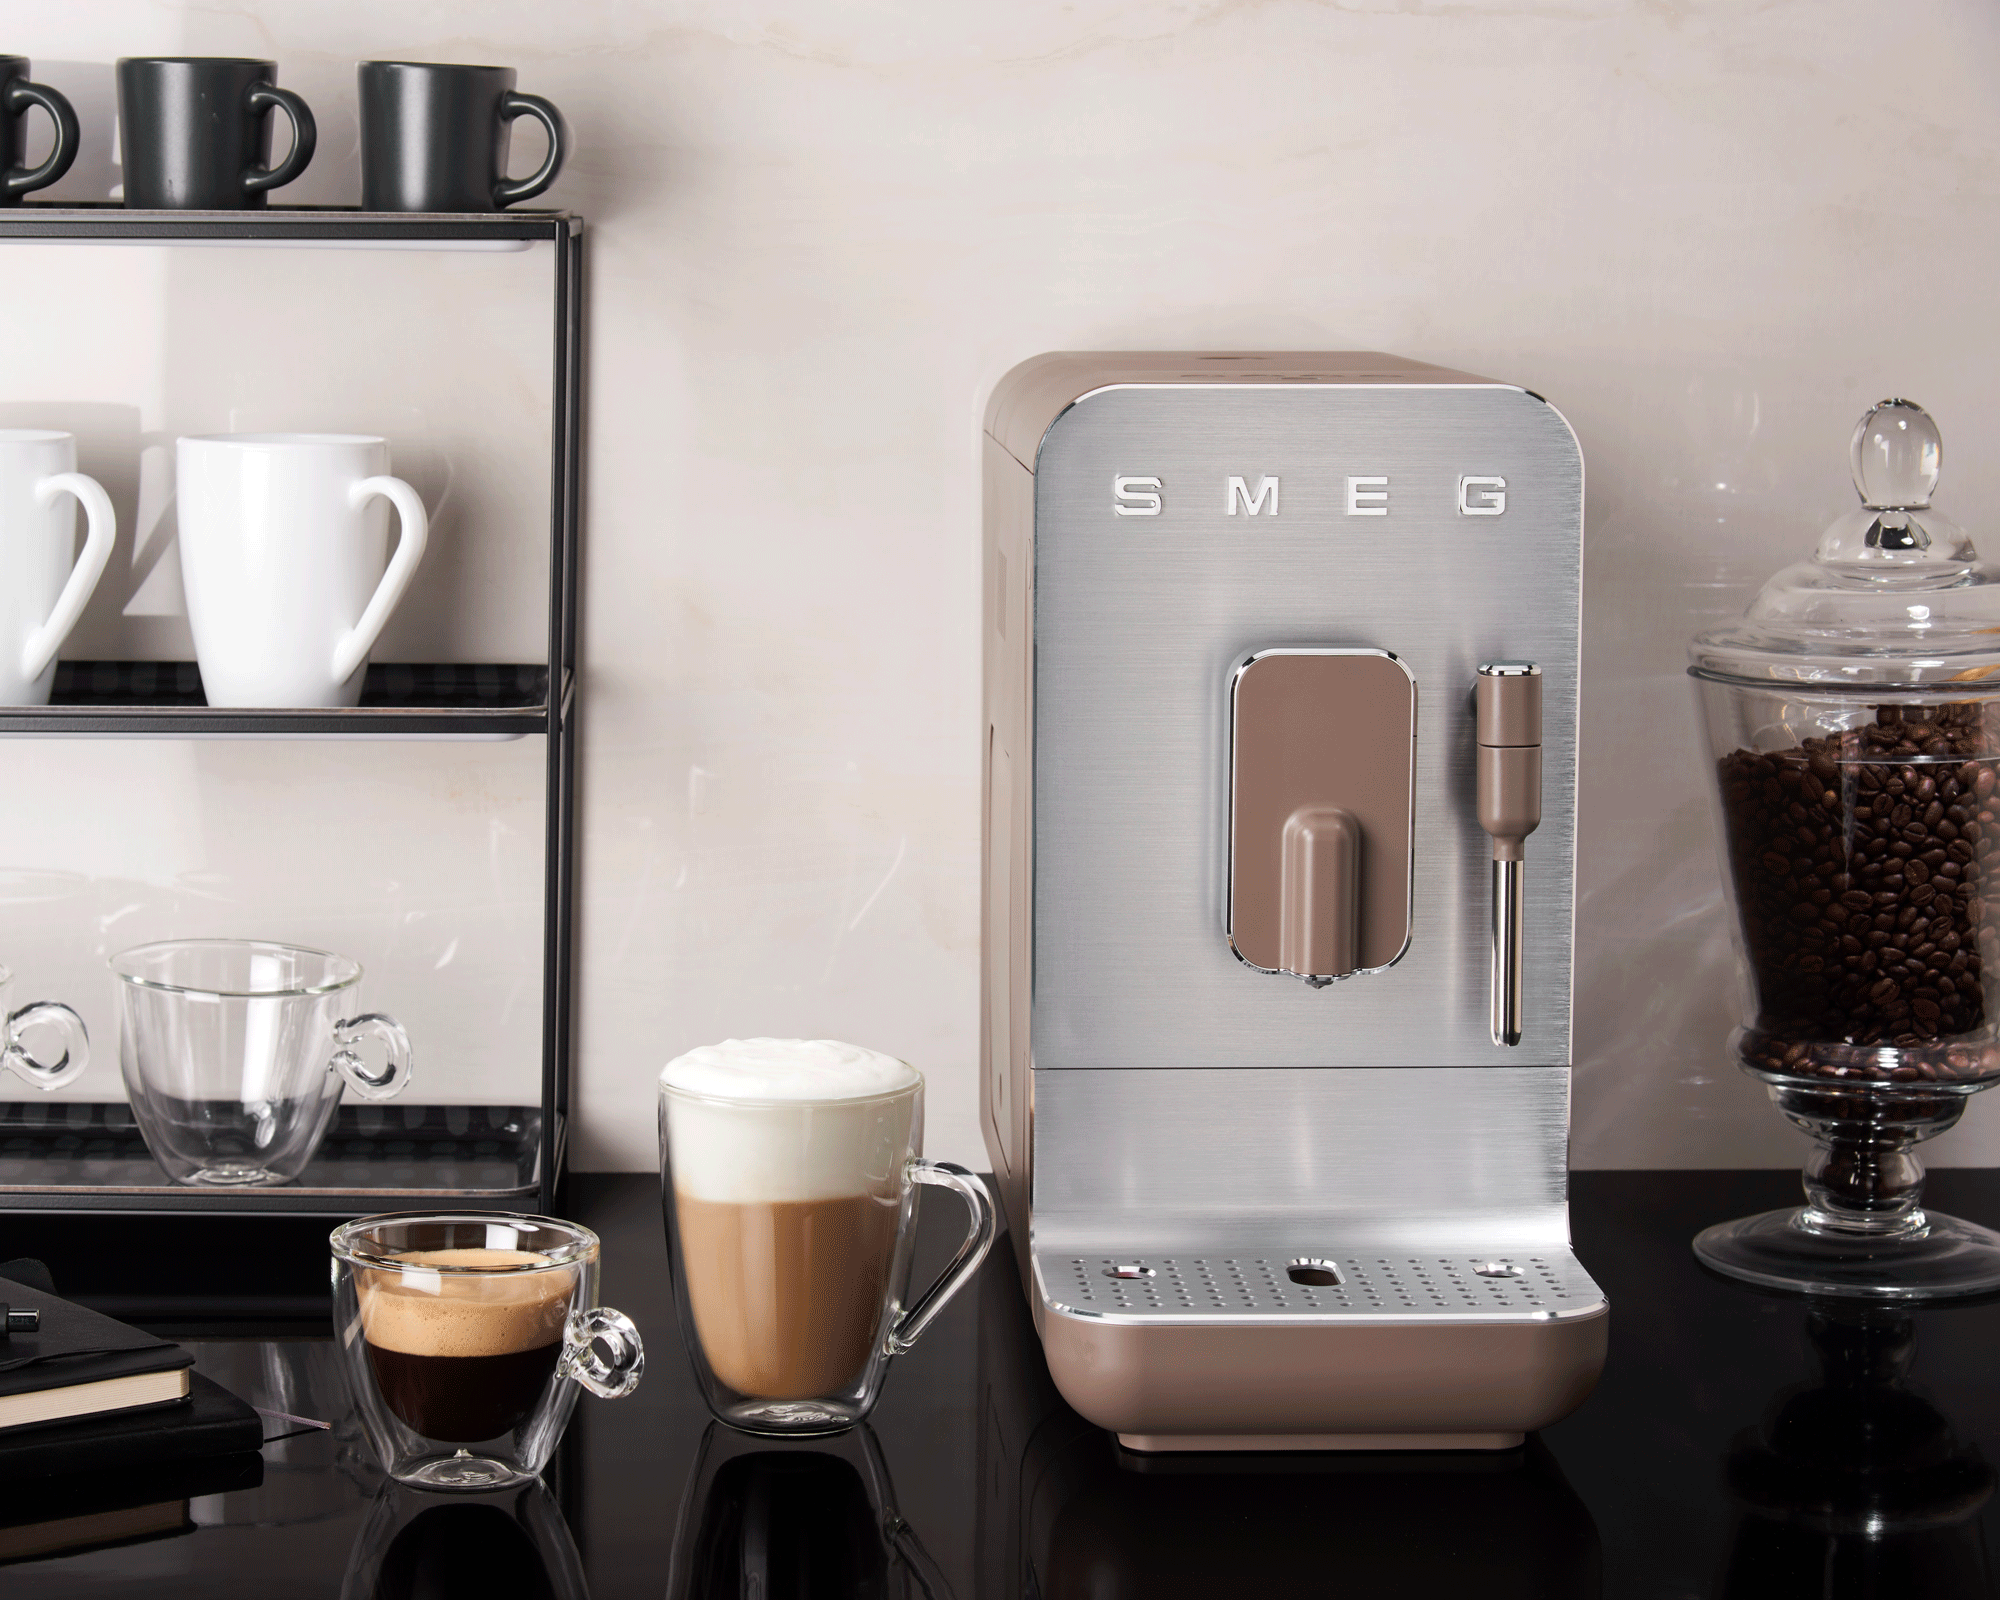 SMEG coffee machine